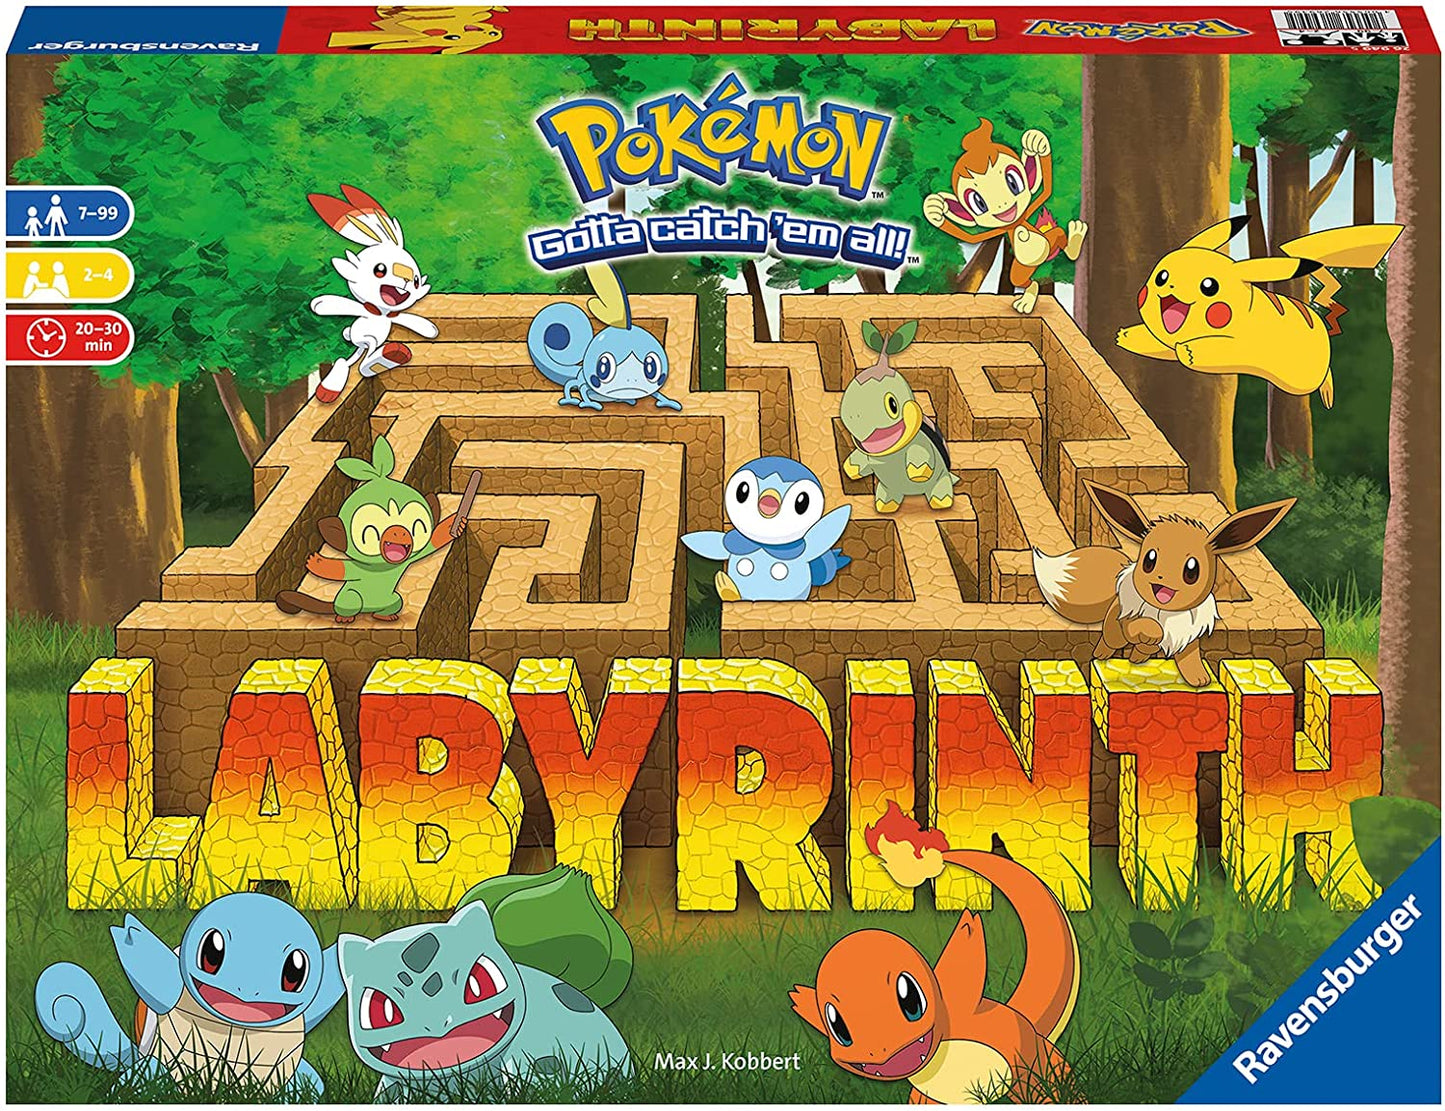 Game - Pokemon Labyrinth